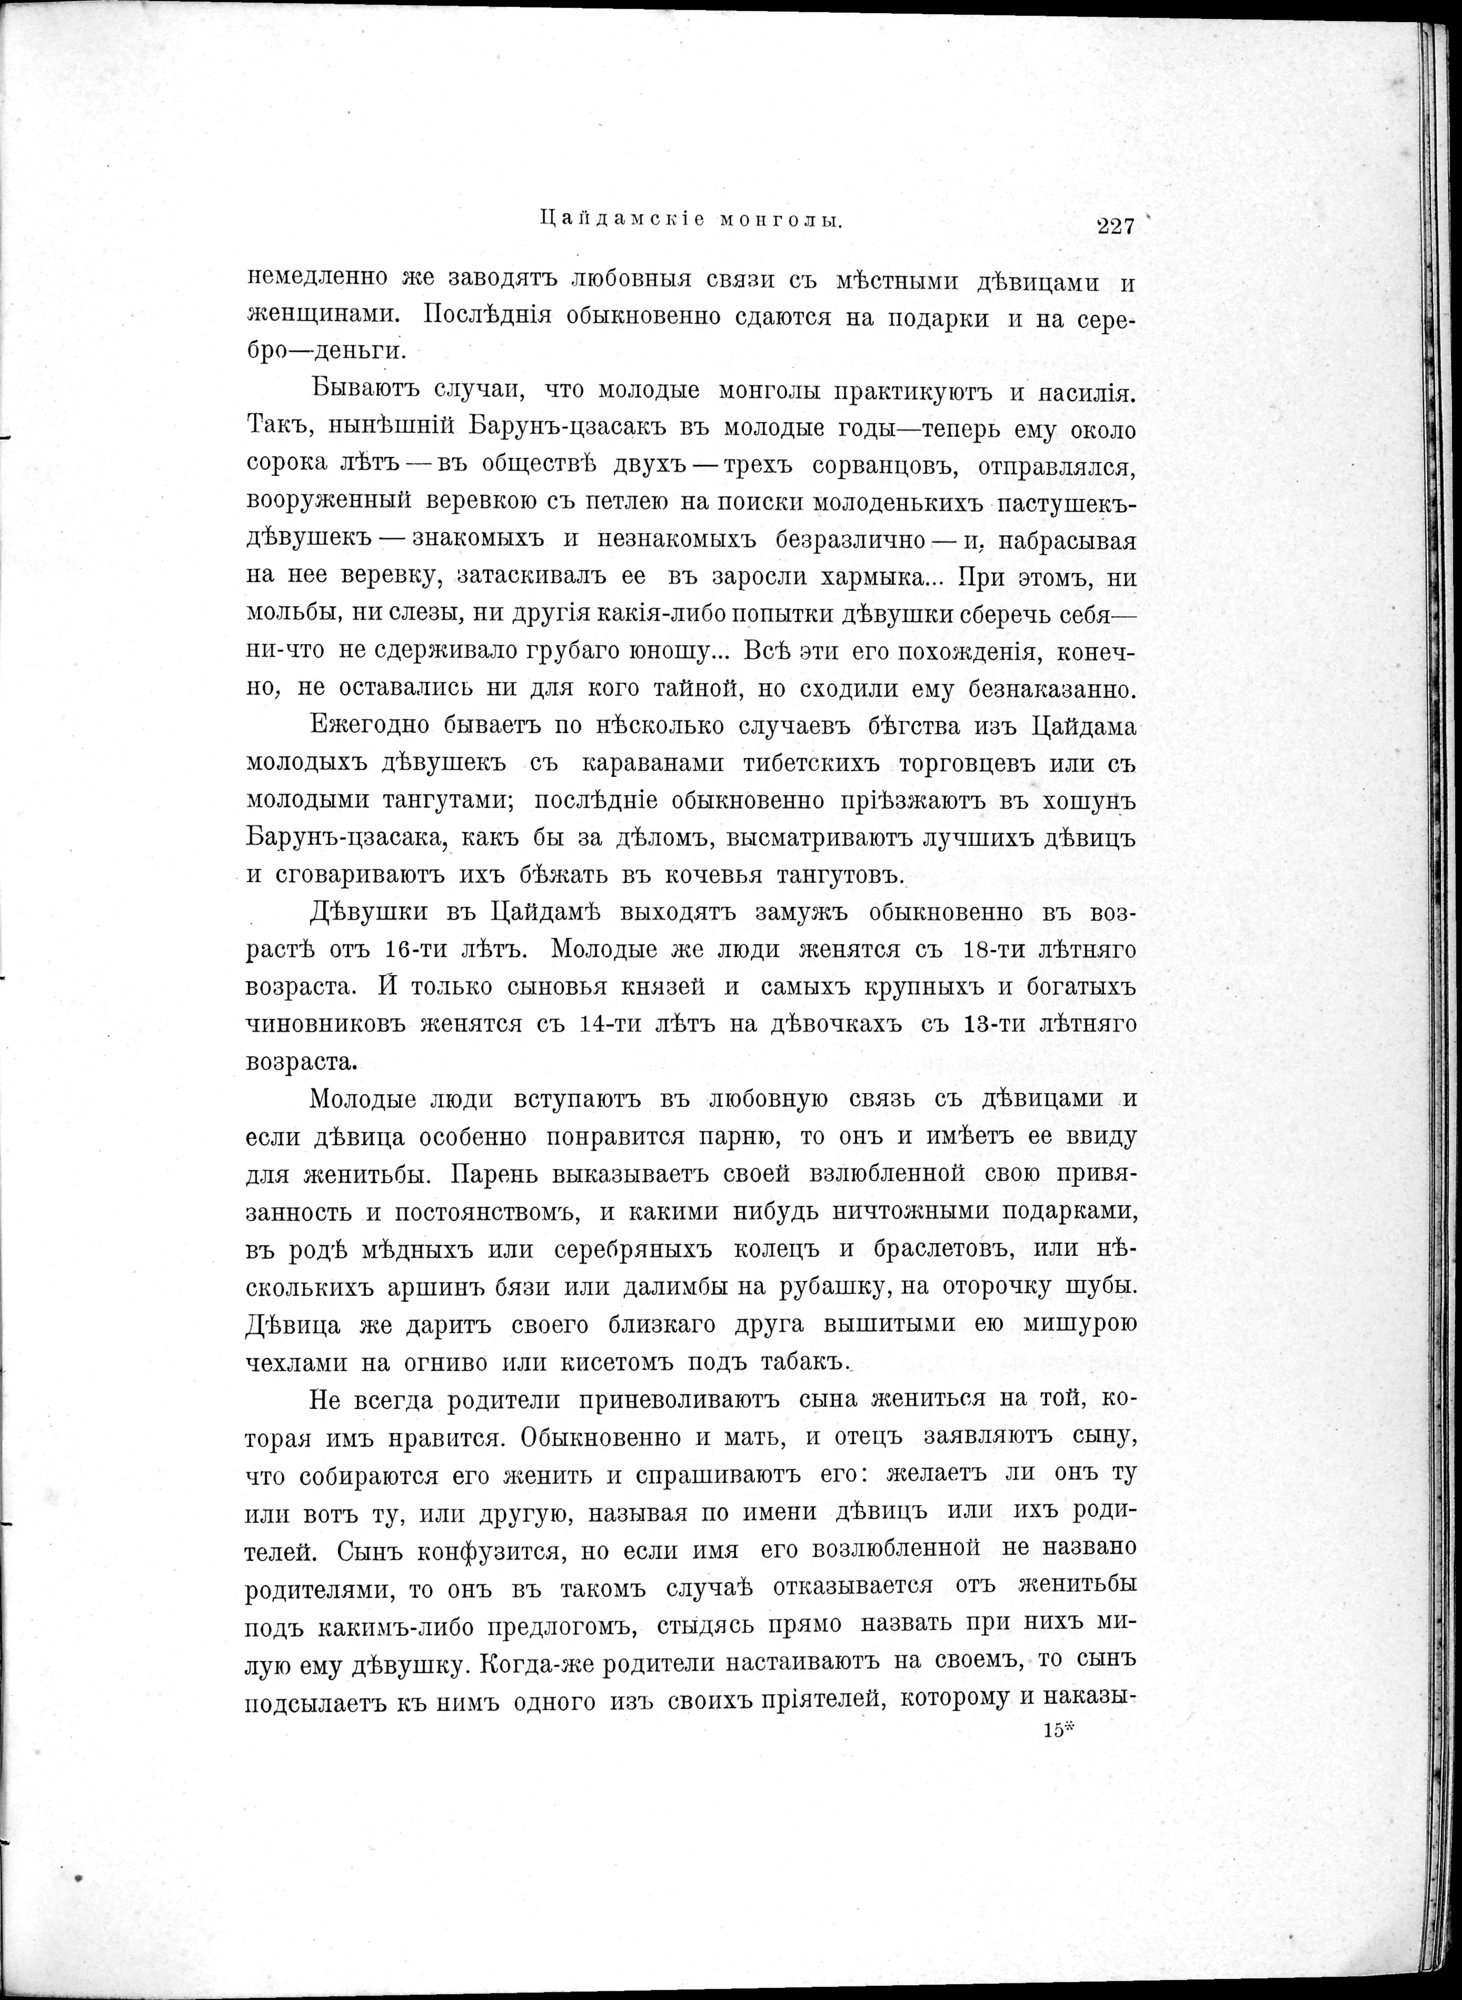 Mongoliia i Kam : vol.1 / Page 279 (Grayscale High Resolution Image)